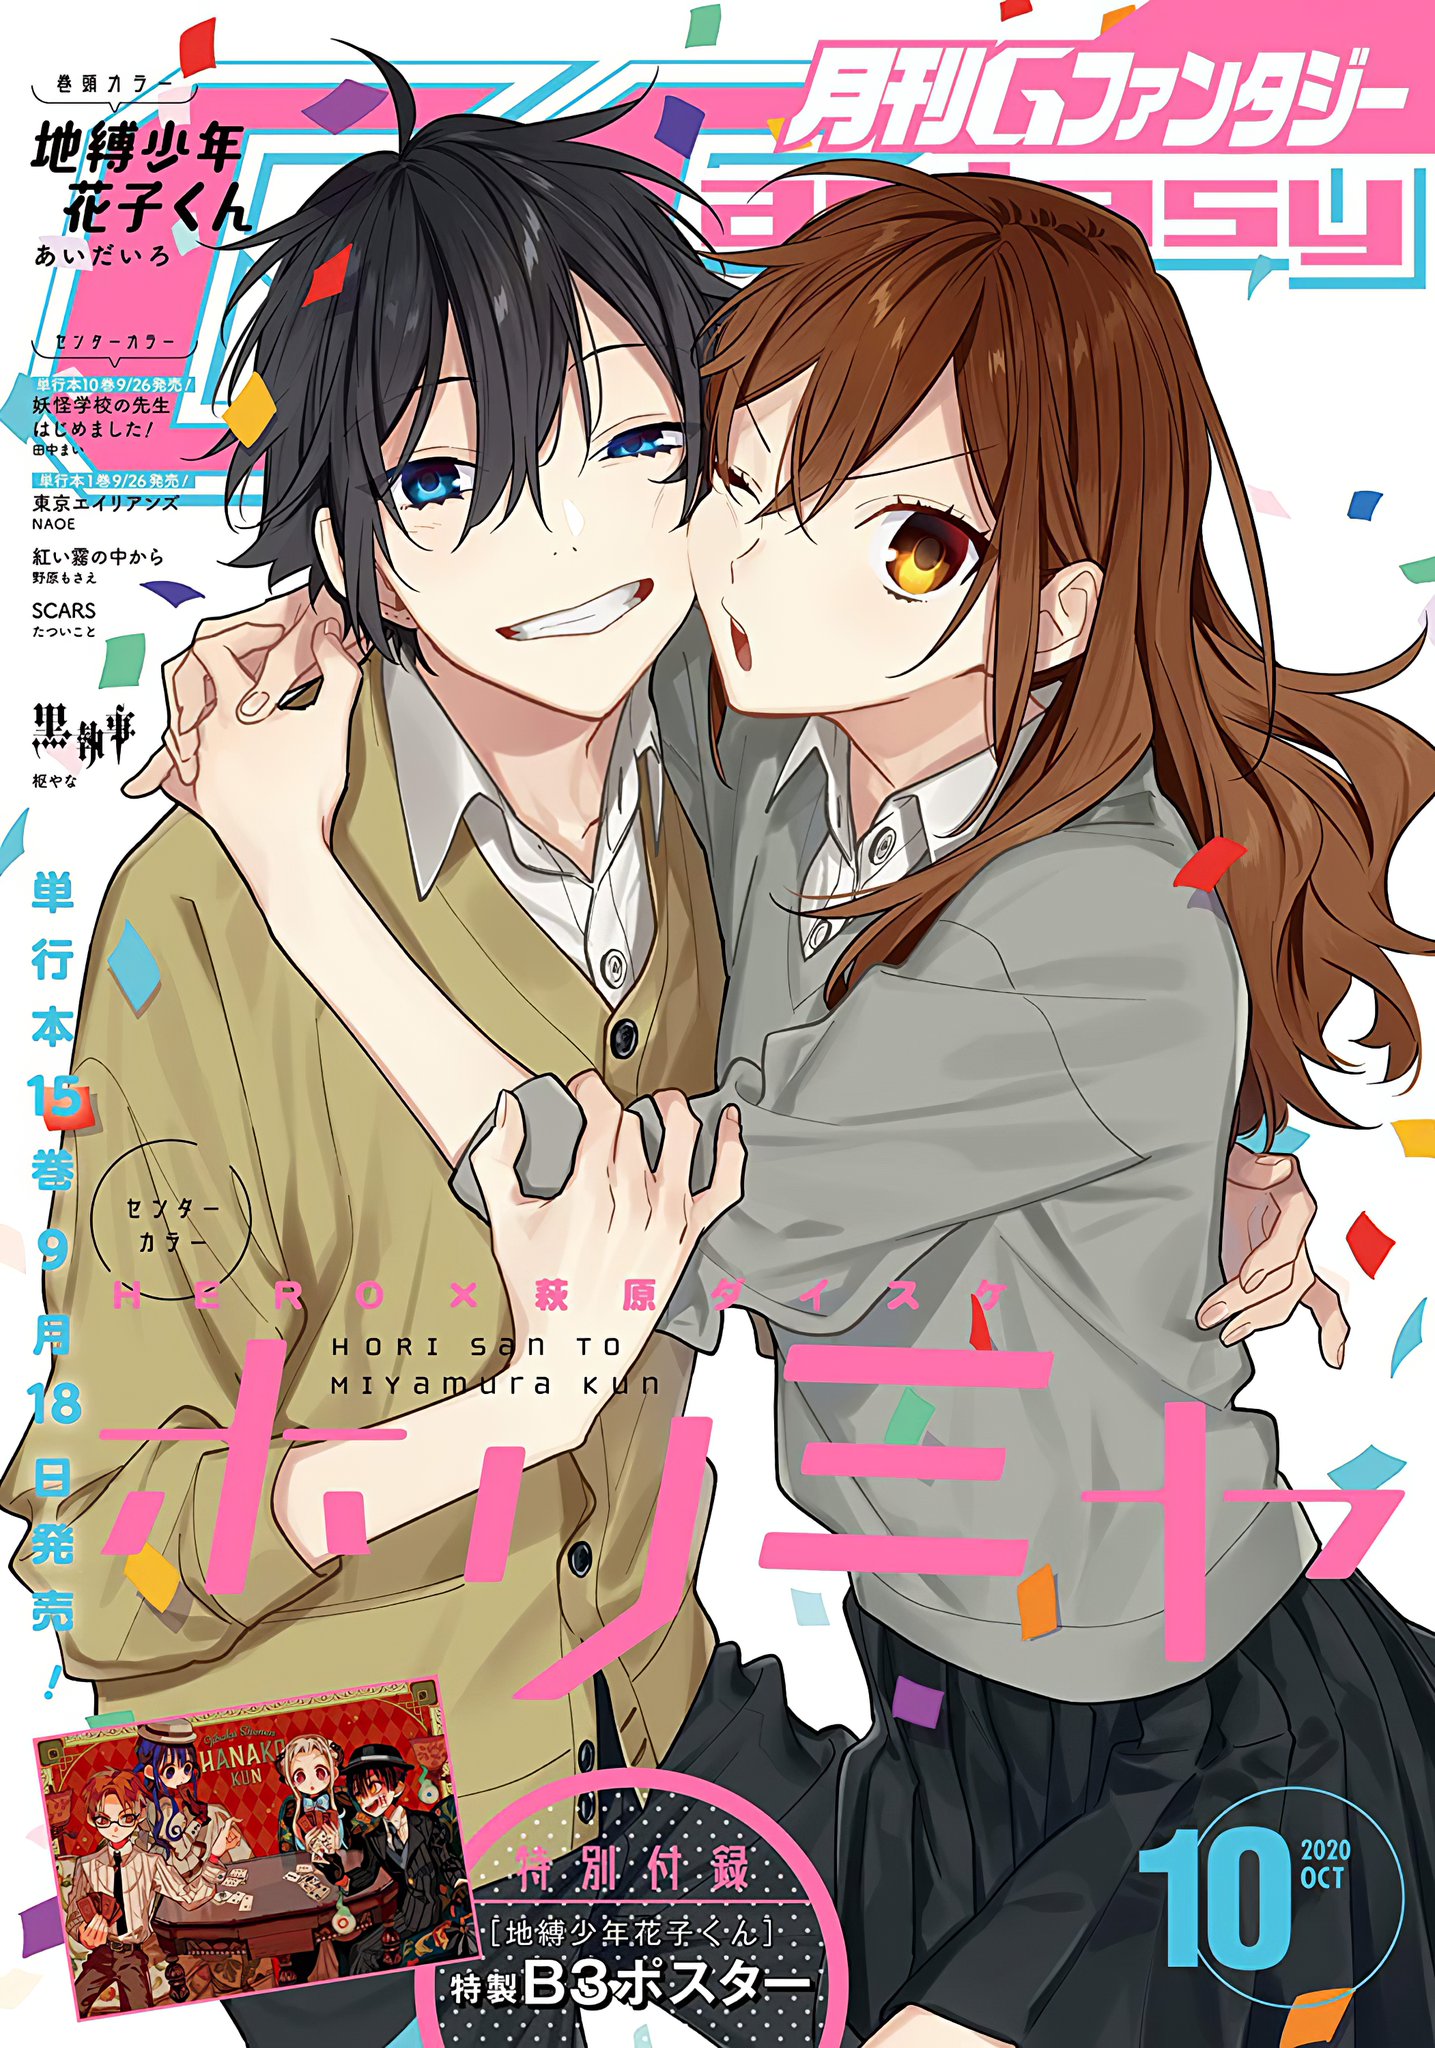 read free romance manga online